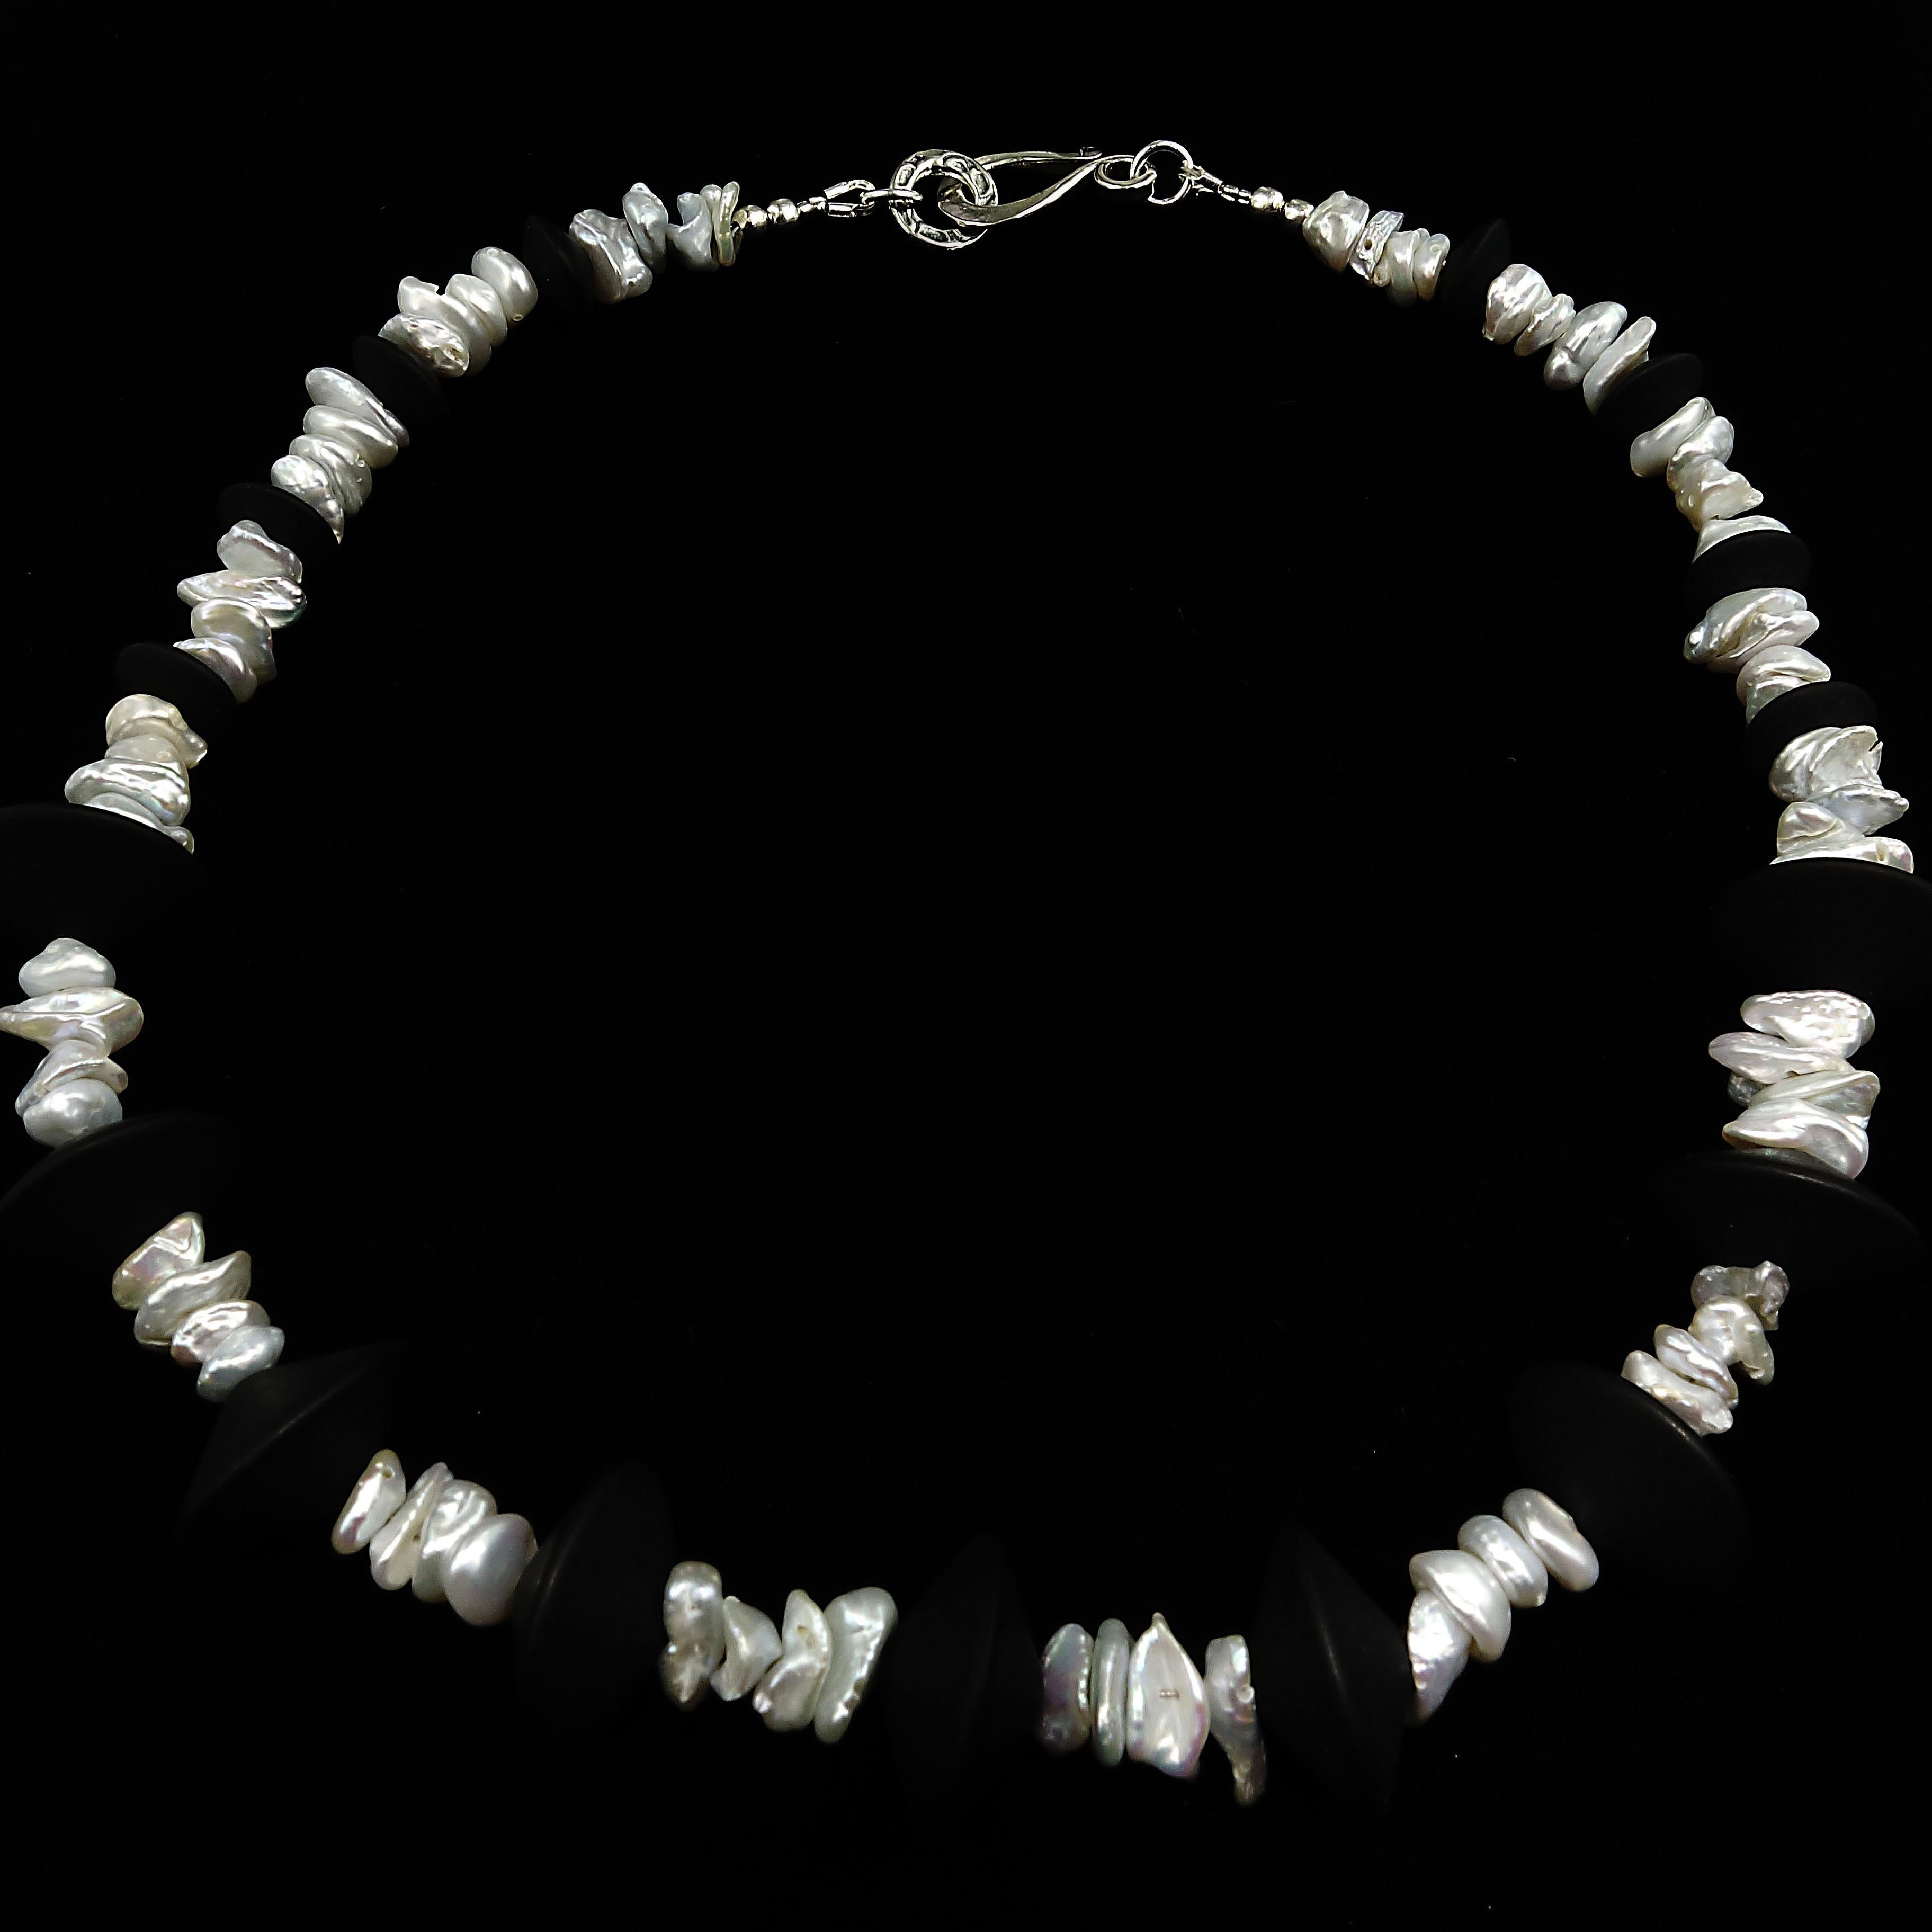 Bead AJD Choker Necklace of Black Onyx and Silvery Biwa Pearls